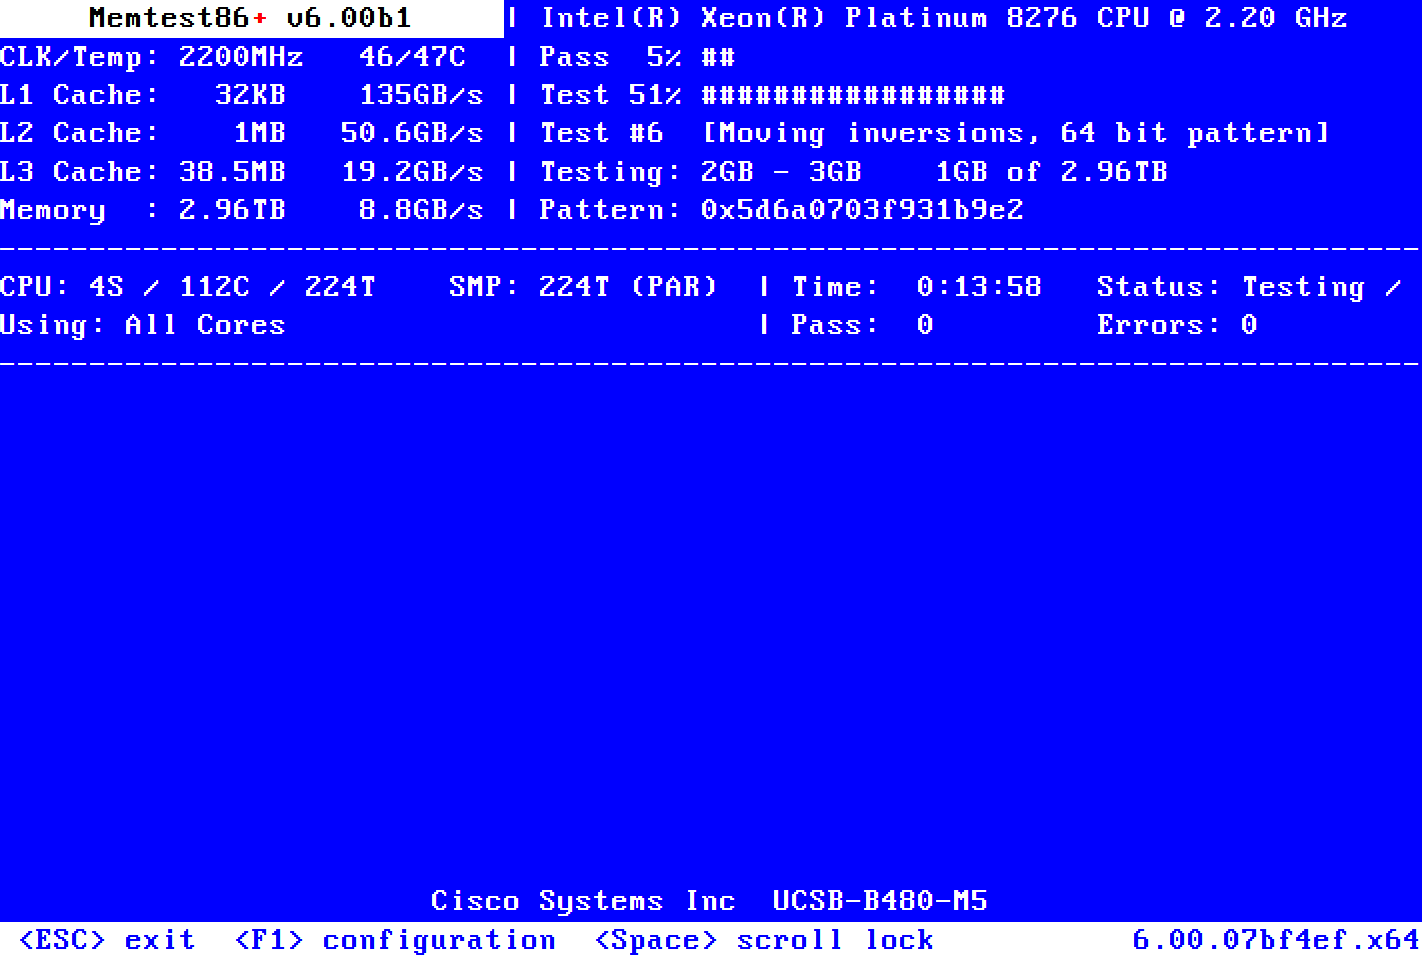 download the last version for windows Memtest86 Pro 10.6.2000